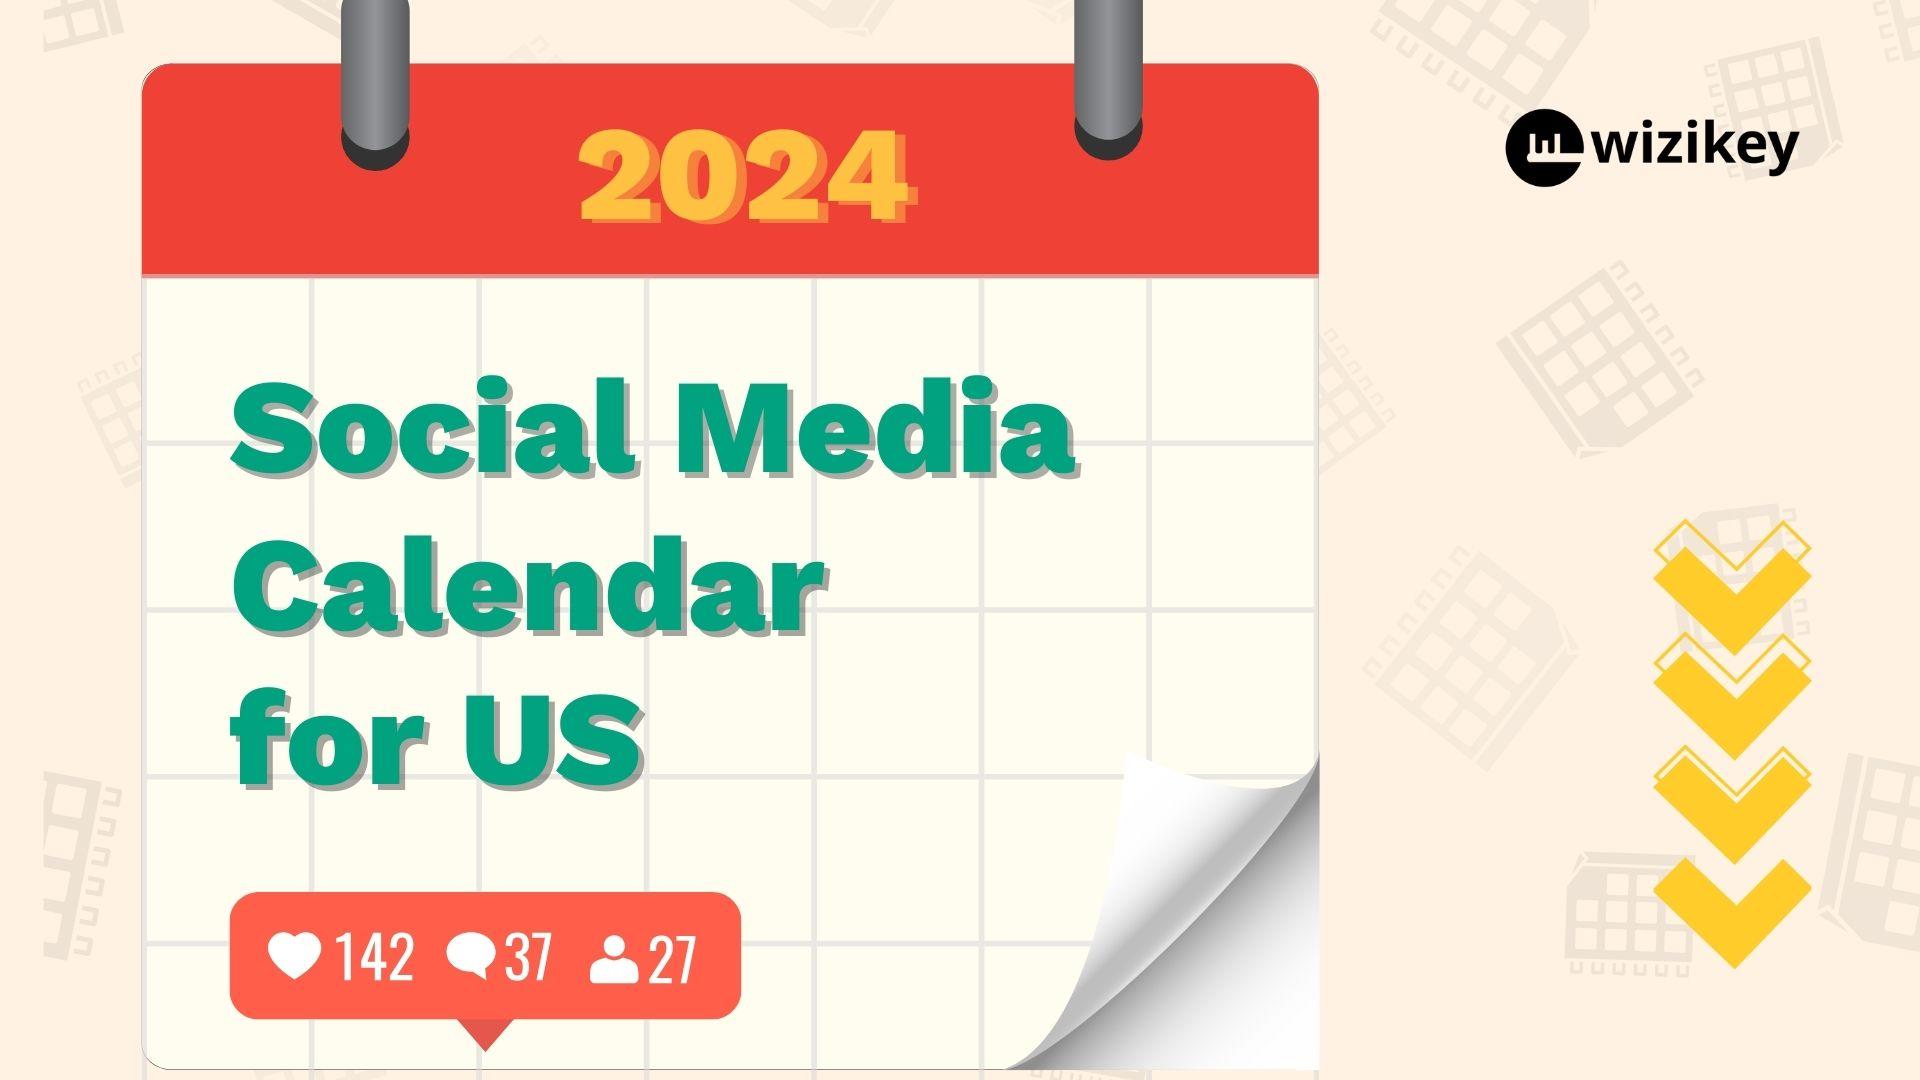 The Ultimate Social Media Calendar for 2024 for the US